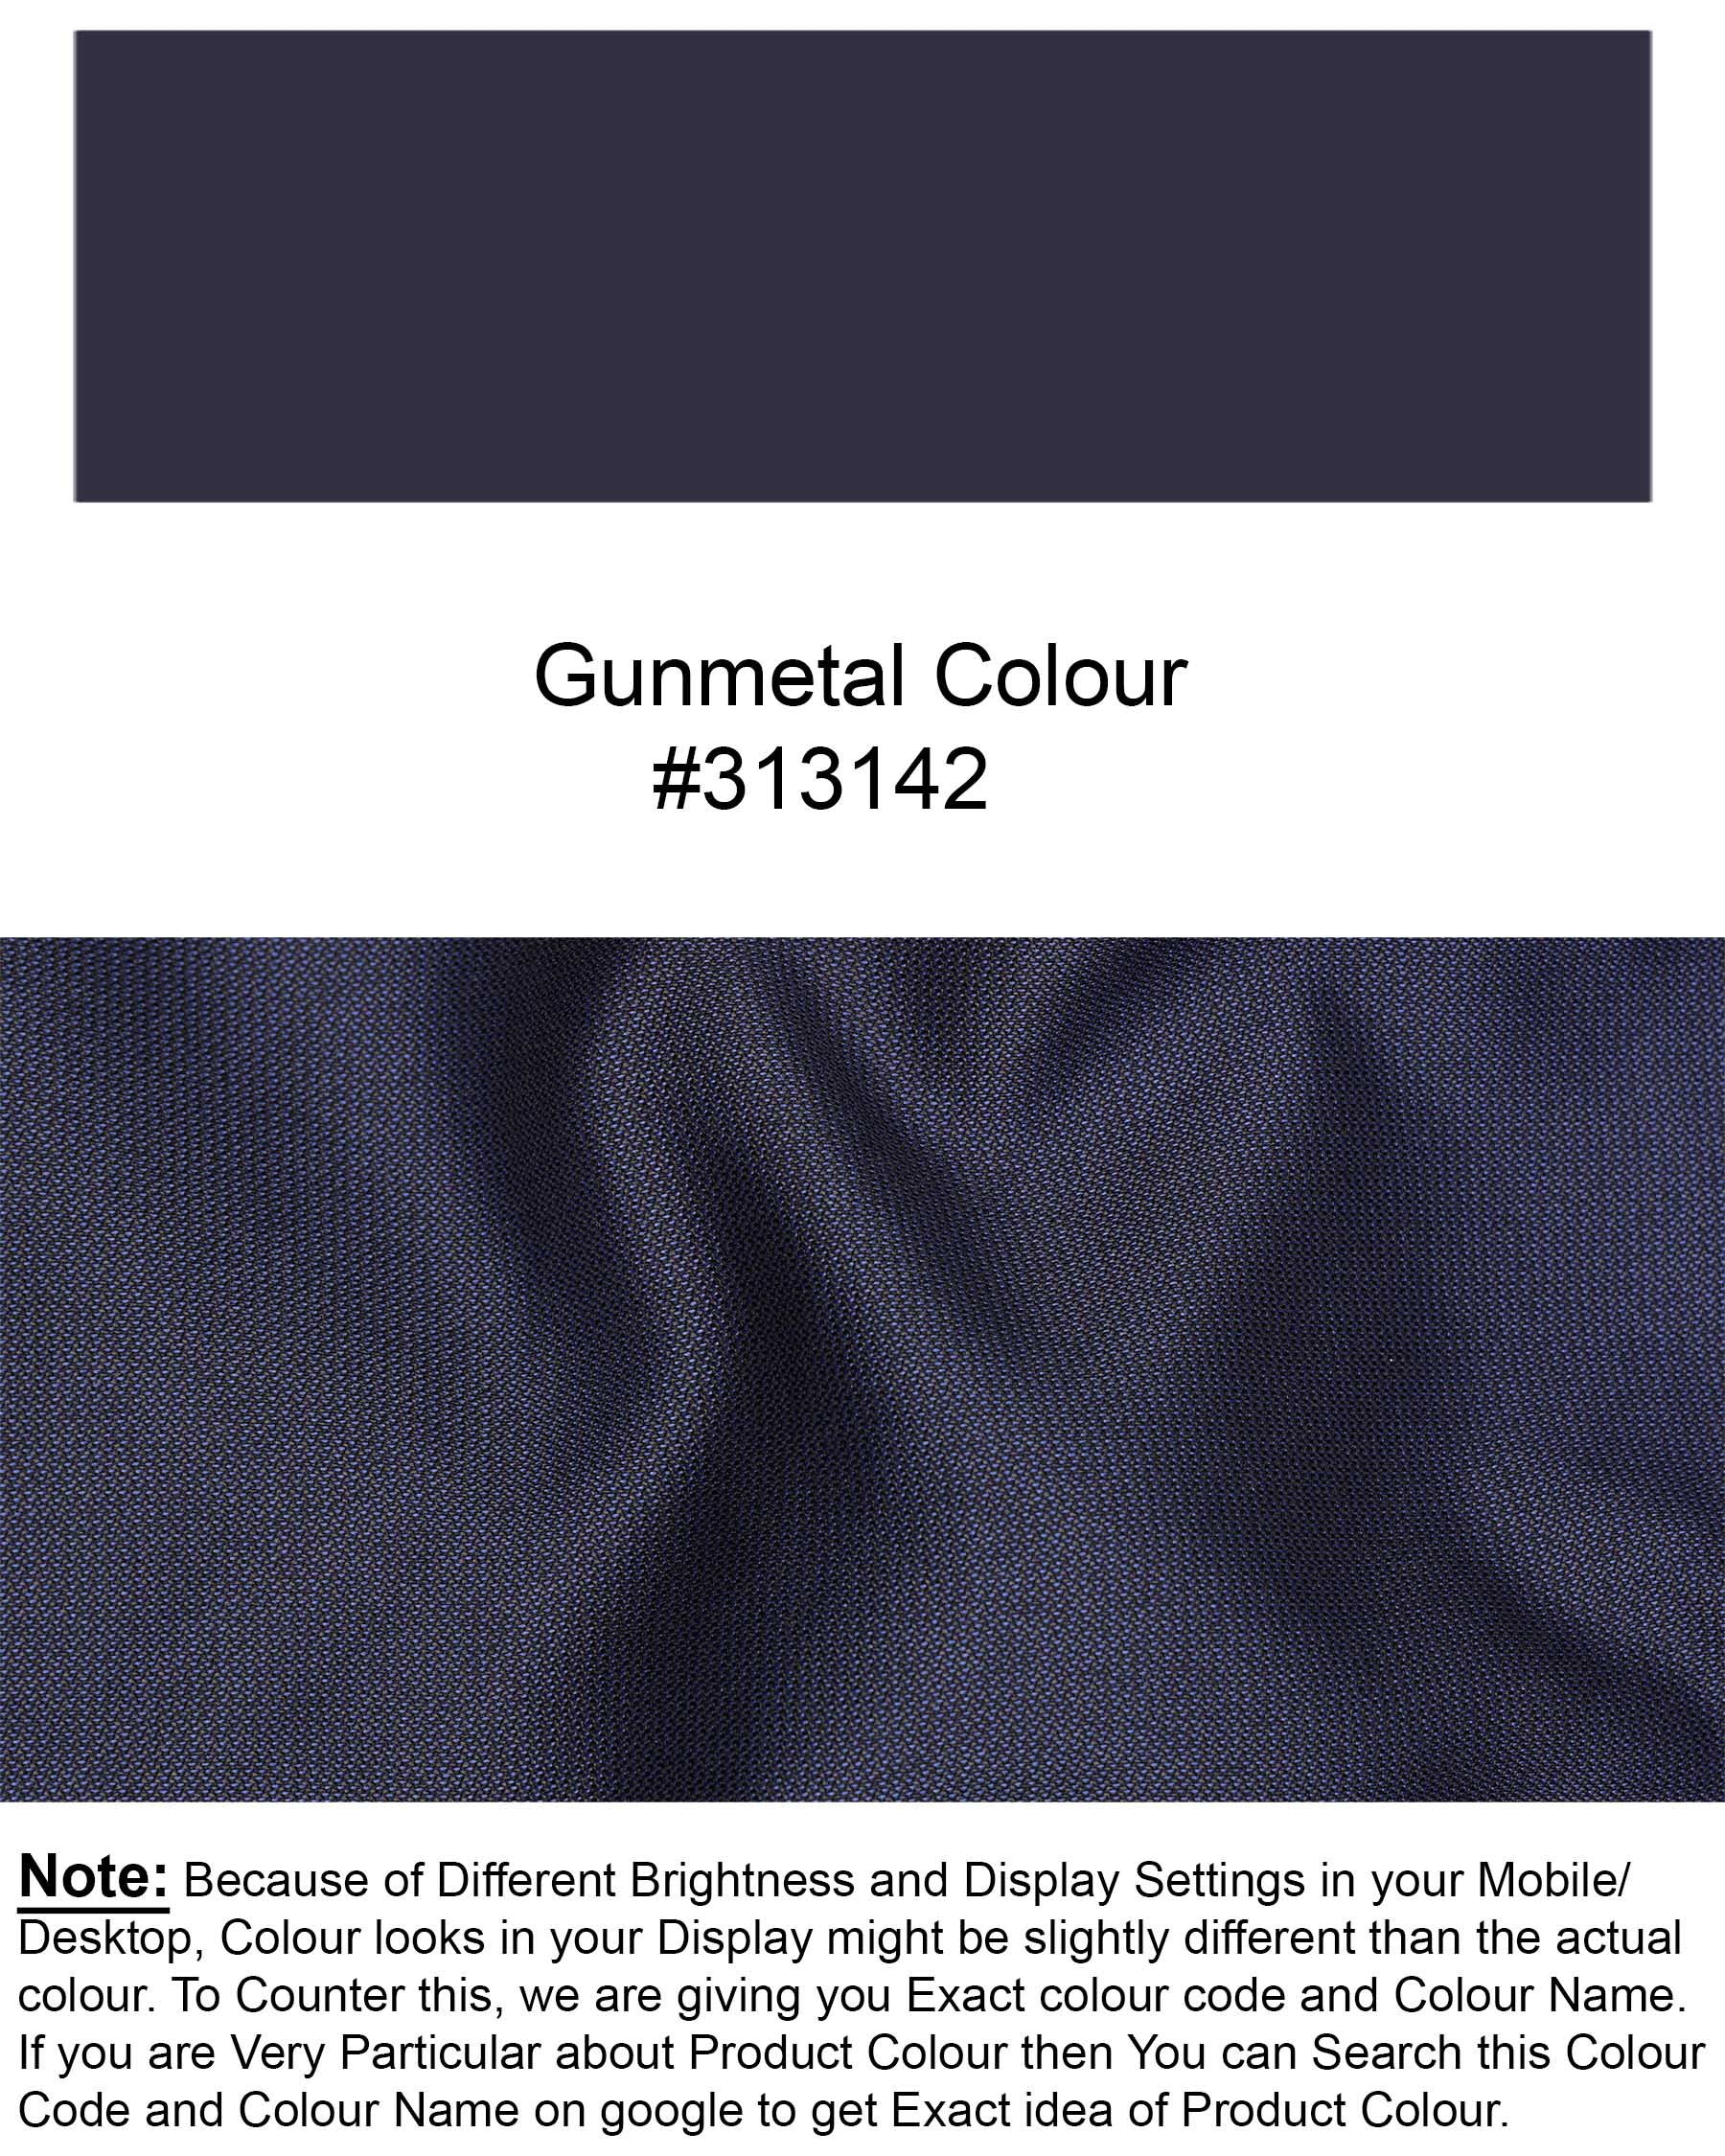 Gunmetal Blue with Black Lapel Tuxedo Suit